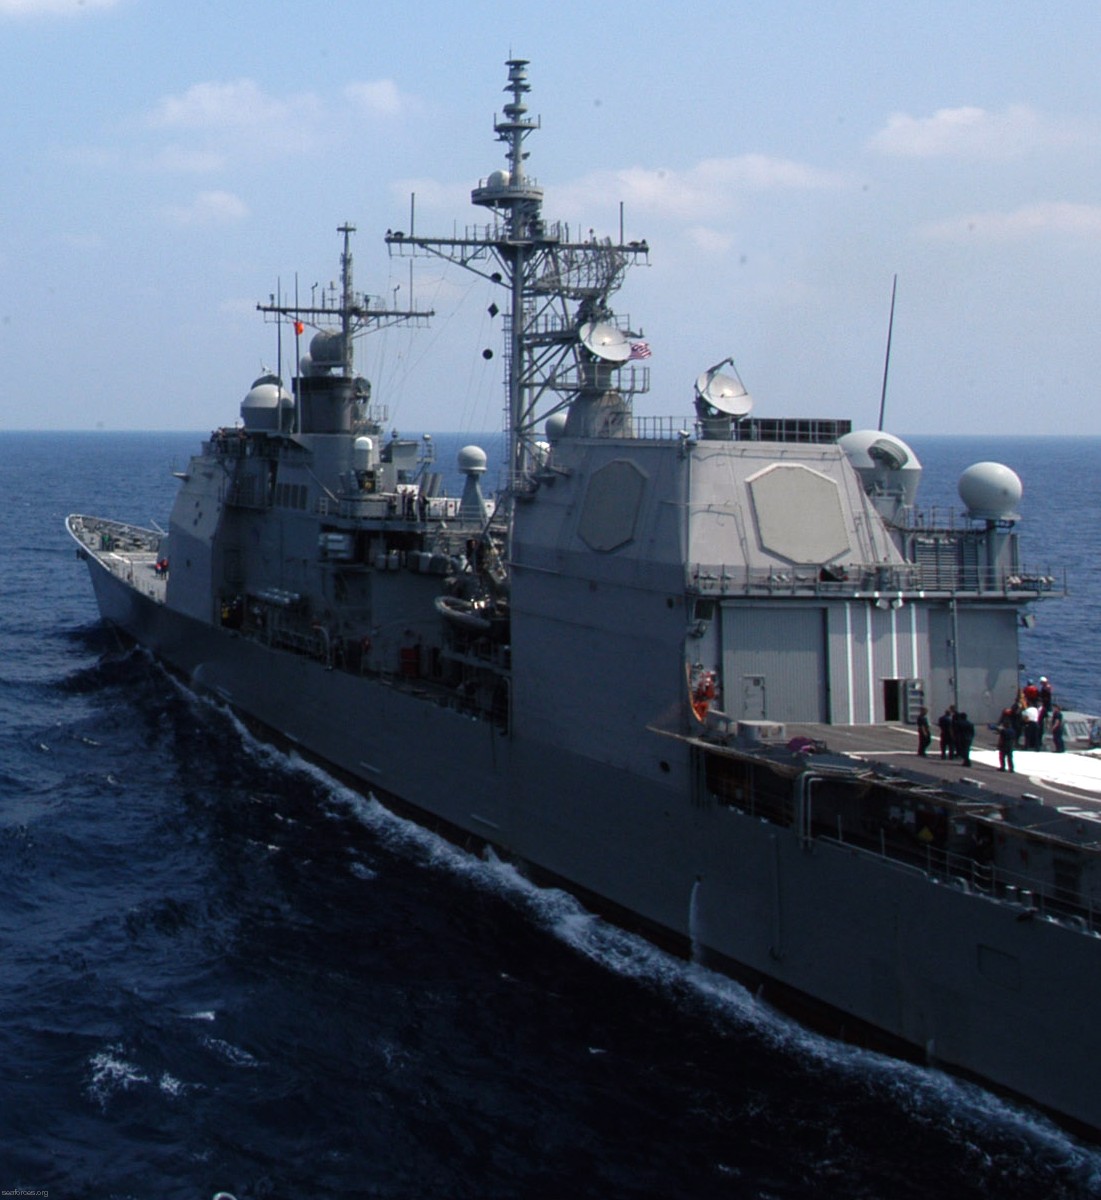 cg-71 uss cape st. george ticonderoga class guided missile cruiser us navy 61 atlantic ocean